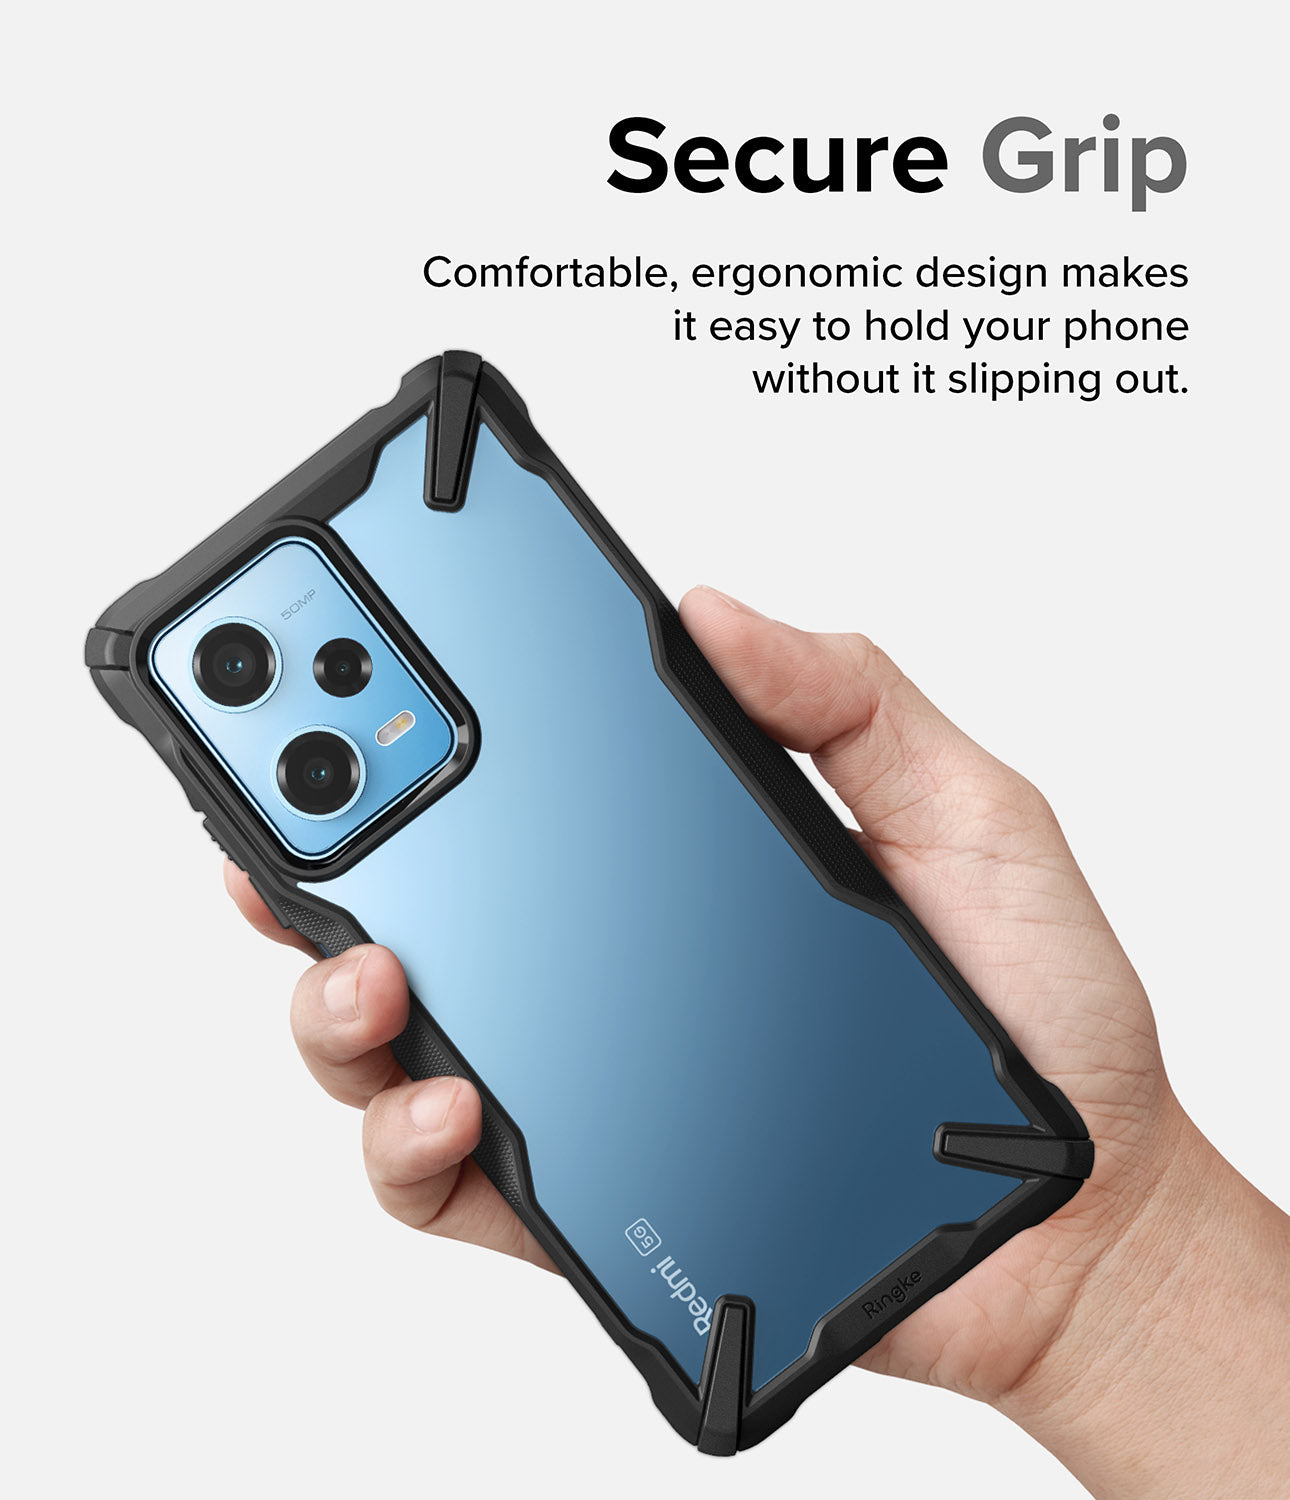 Secure Grip - Comfortable and ergonomic design